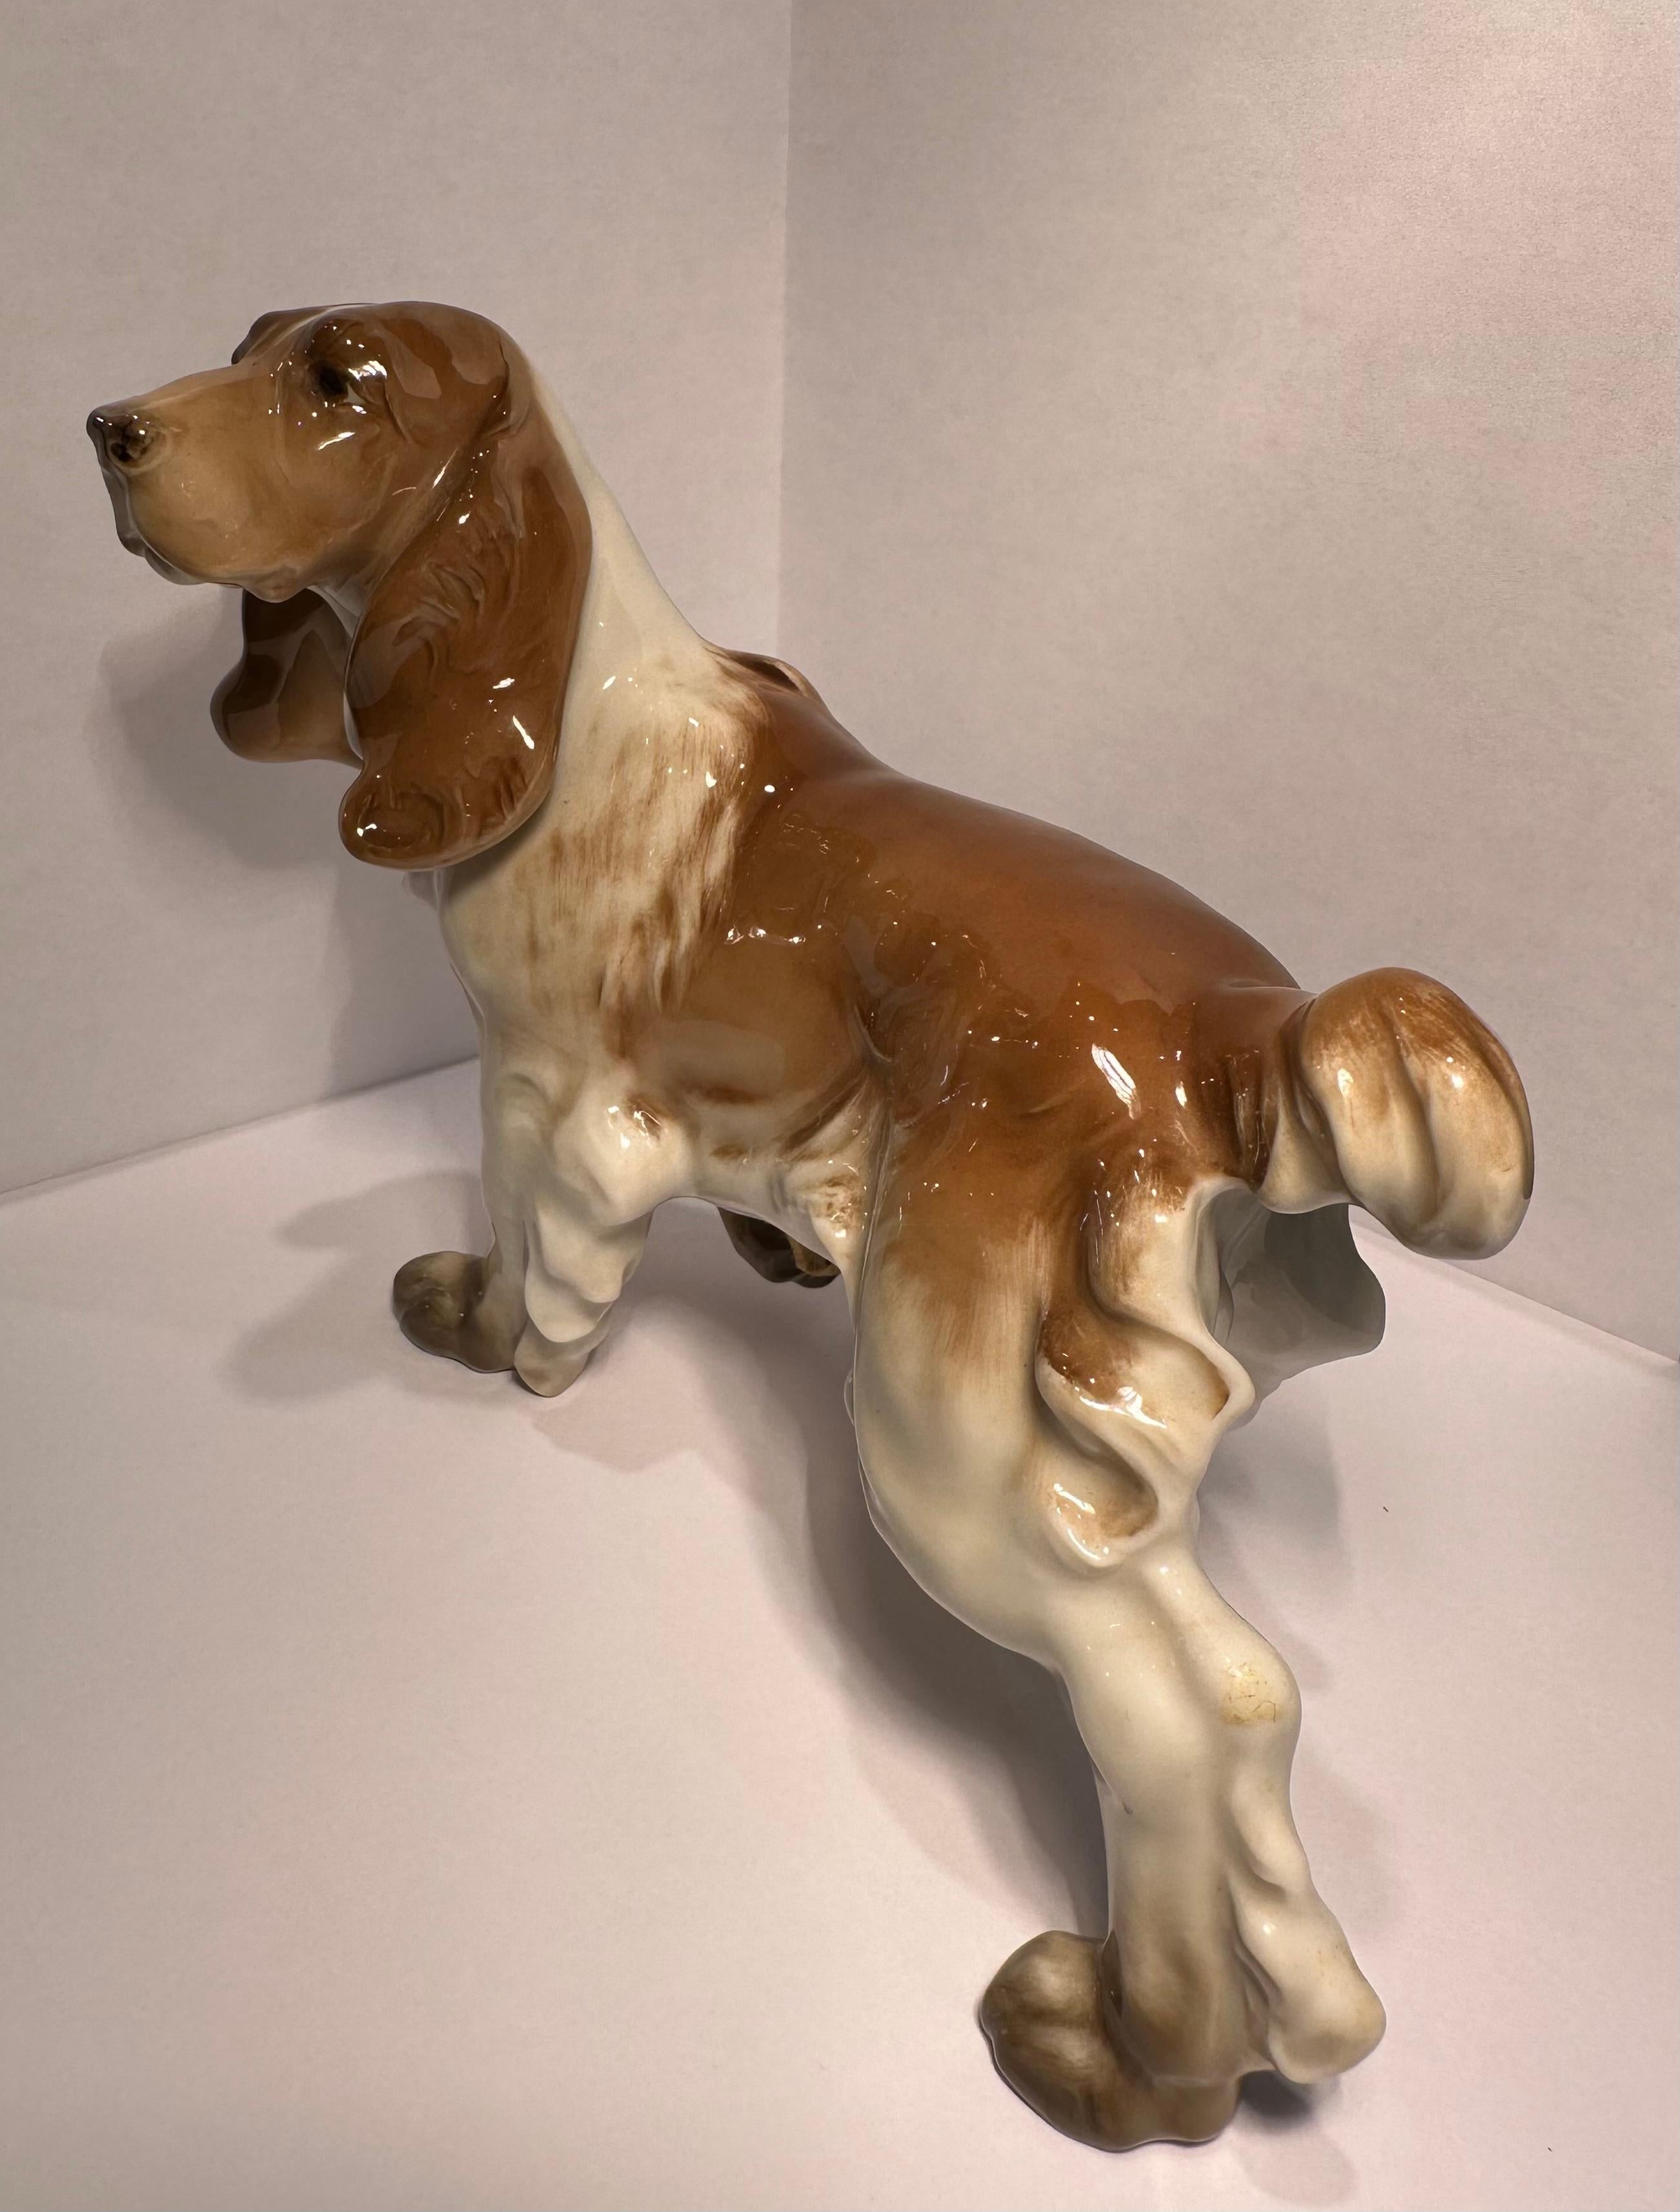 Finest Quality Hutschenreuther Germany Porcelain Cocker Spaniel Dog Figurine. 3